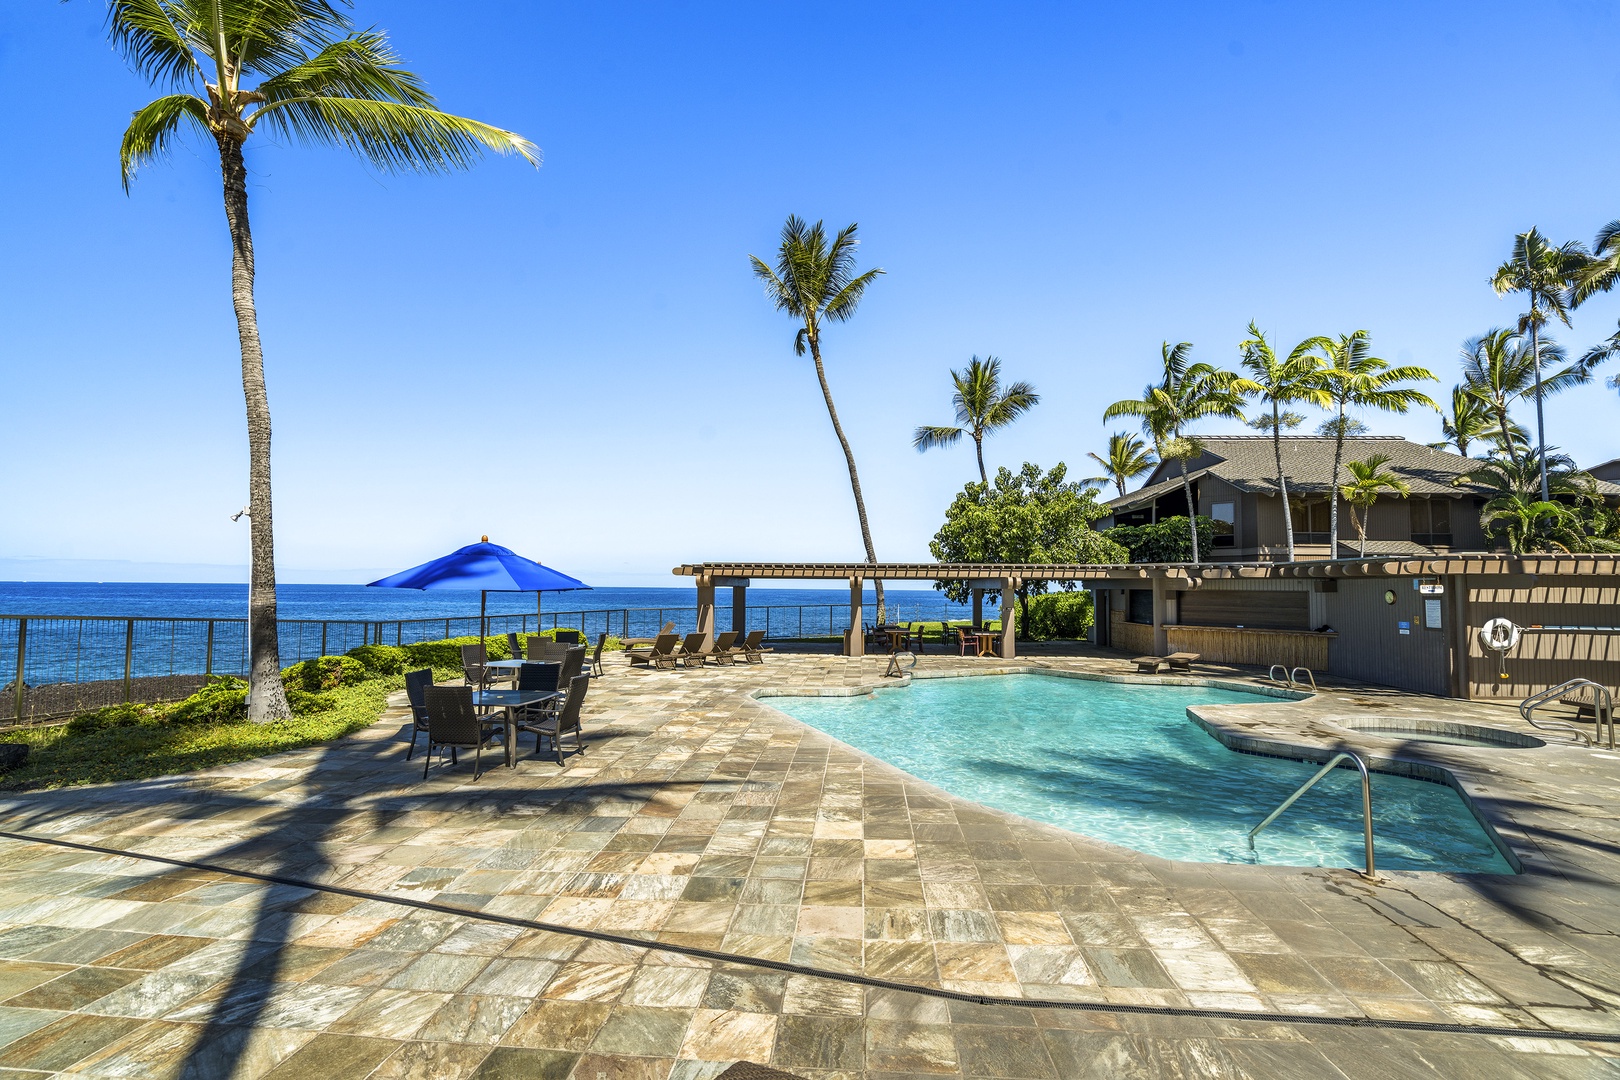 Kailua Kona Vacation Rentals, Kanaloa at Kona 1302 - Ocean facing pool at the complex